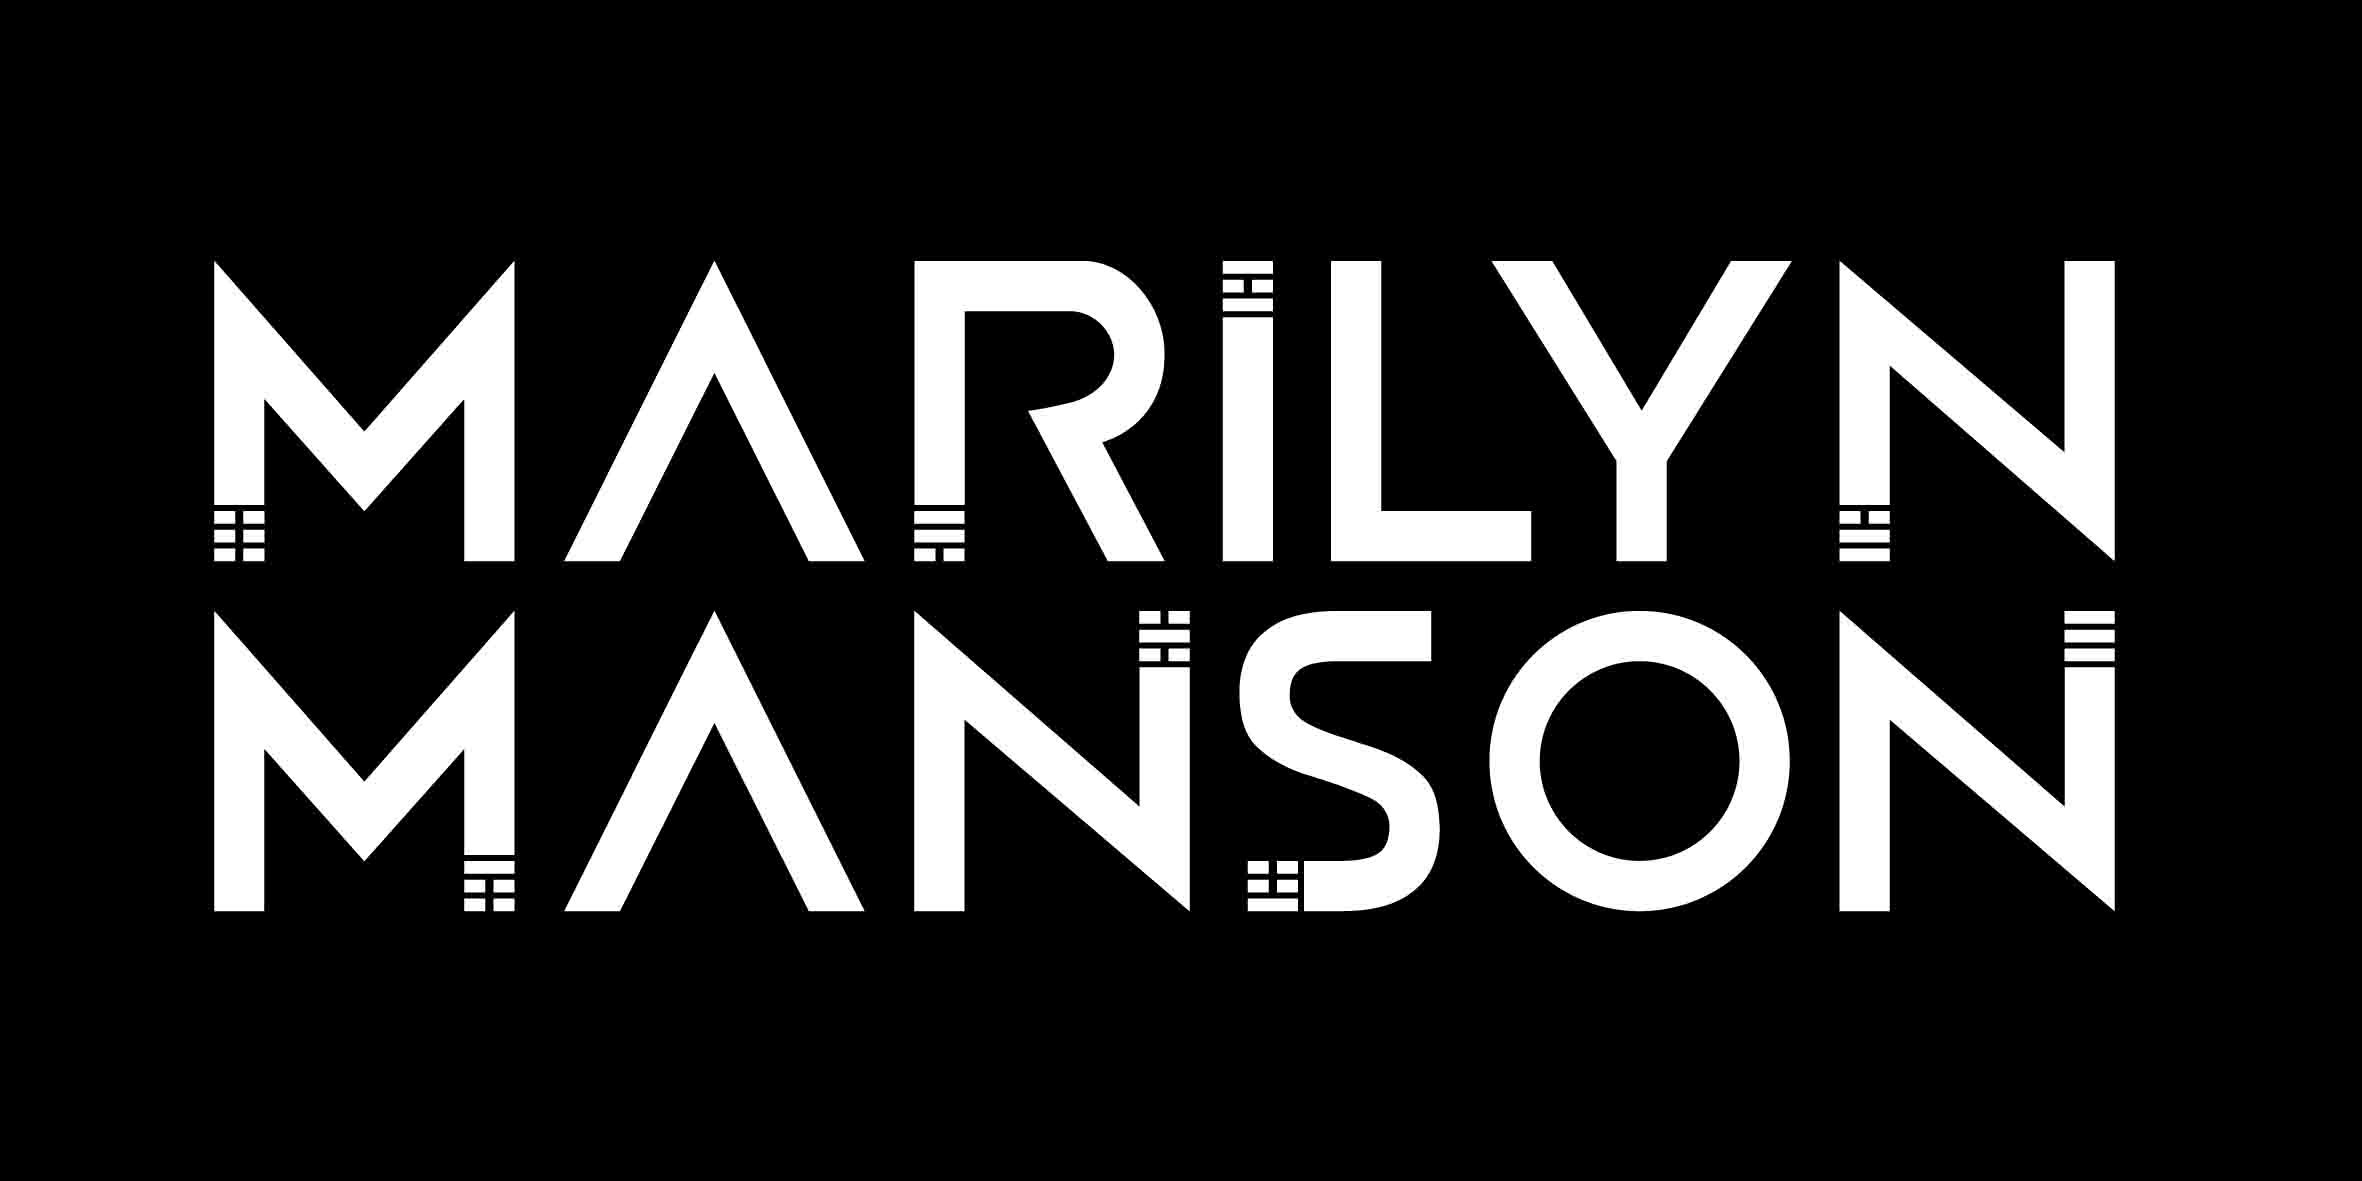 Marilyn Manson Typography Black Background Monochrome Music Simple Background Band Logo 2362x1181